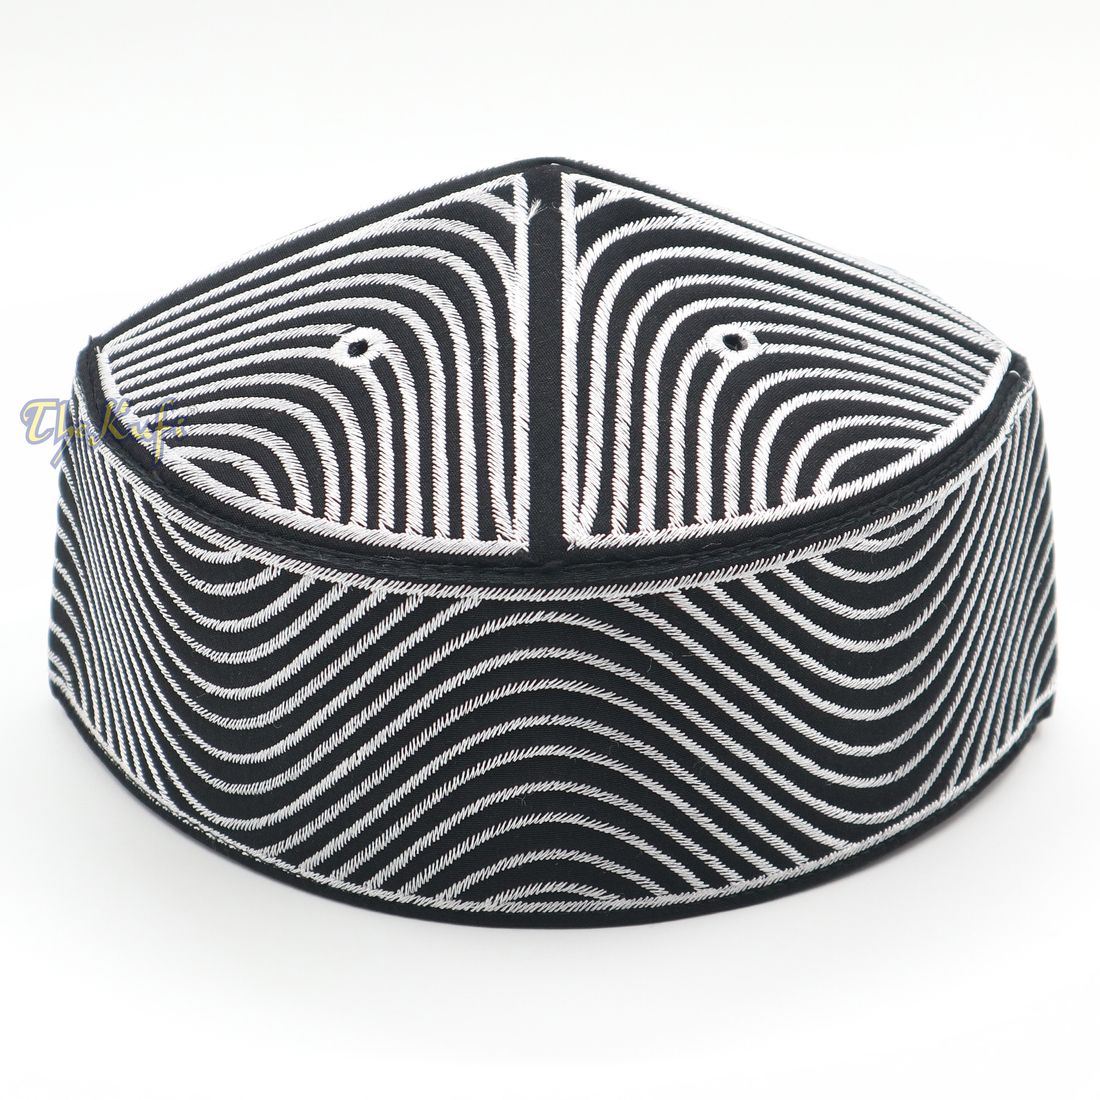 Exclusive Black Round Peak-top Wave Design Kufi Hat with Silver-tone Embroidery Semi-rigid Taj Crown Cap